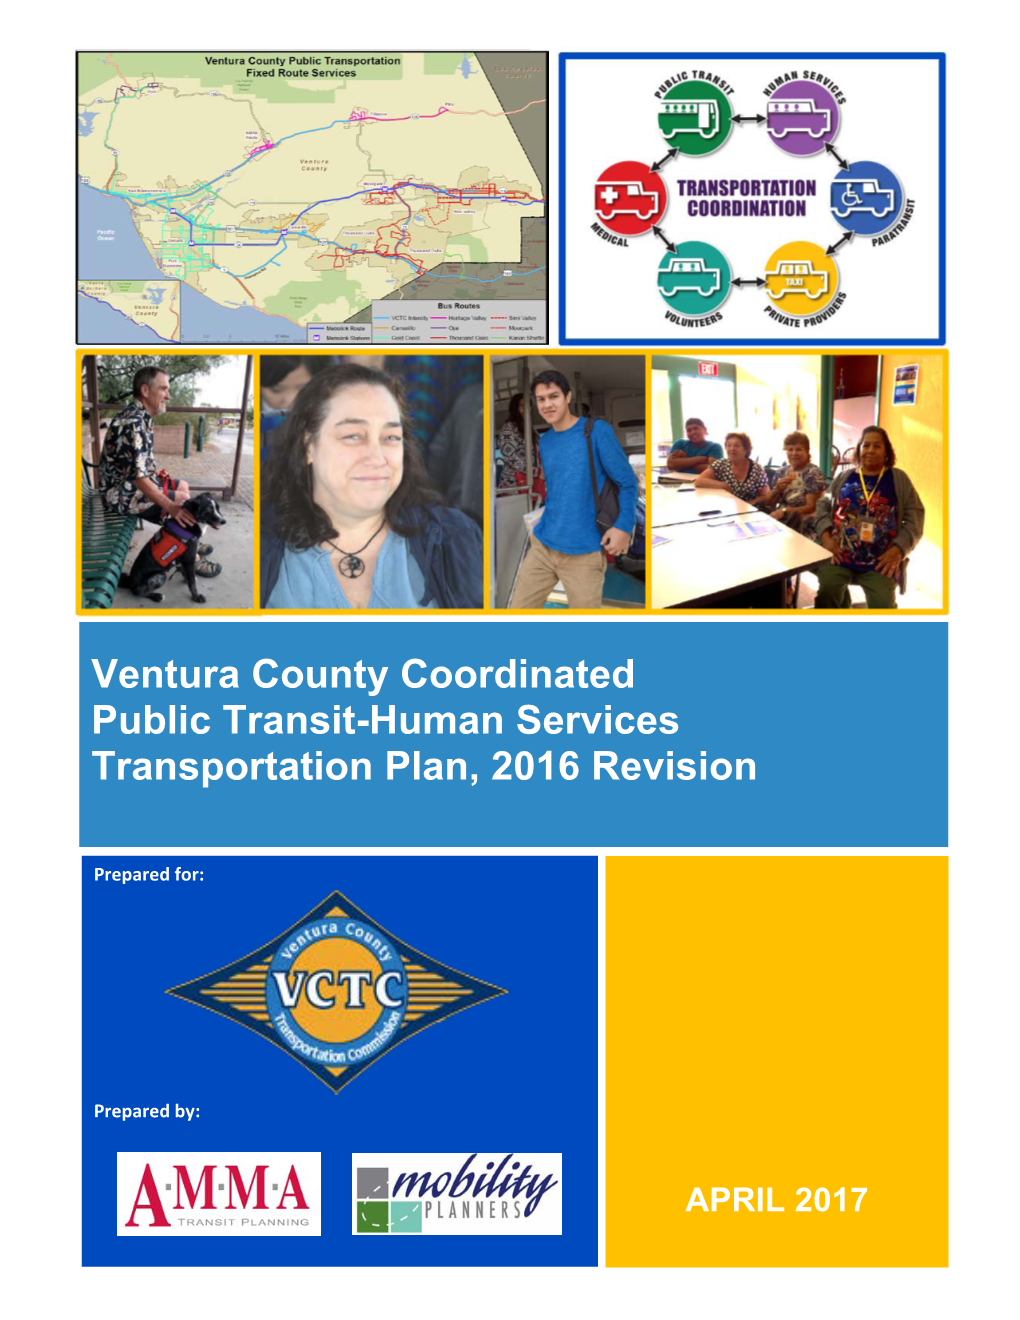 Ventura County Coordinated Public Transit-Human Services